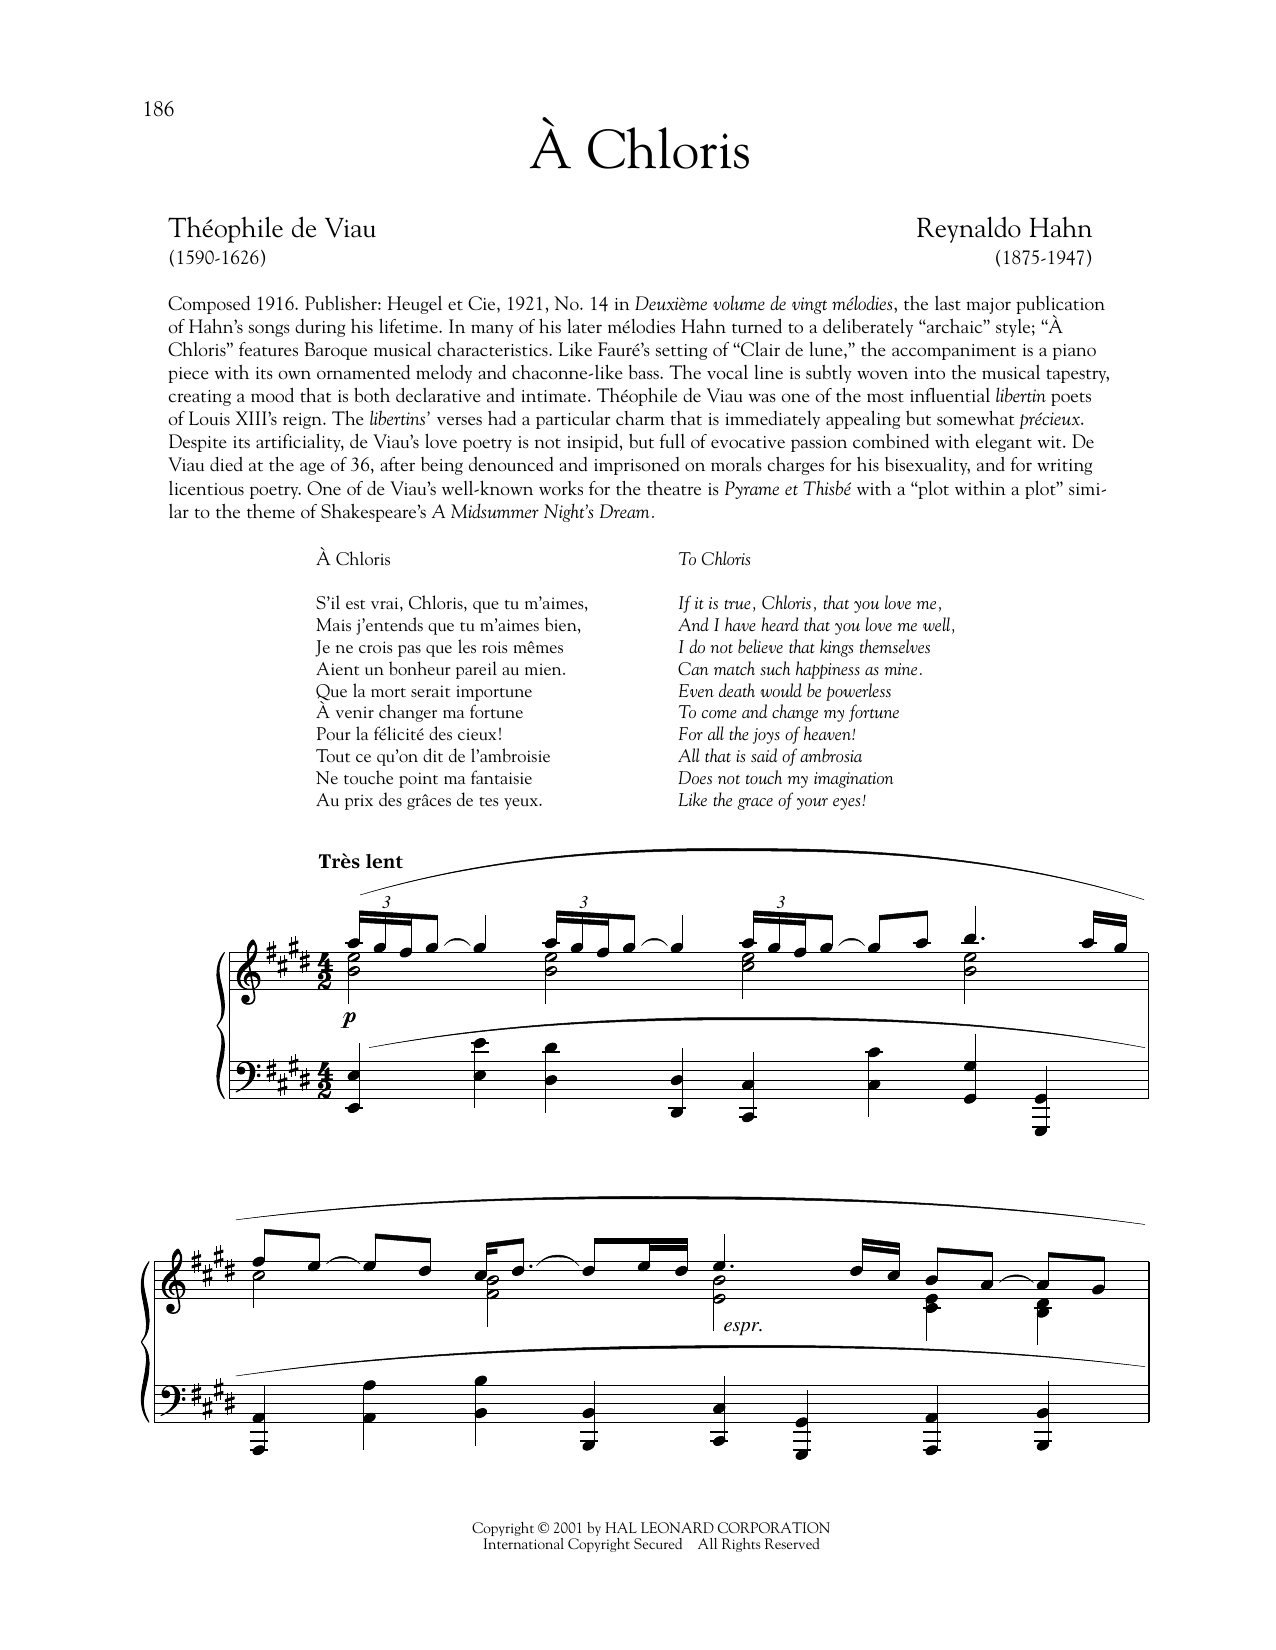 Reynaldo Hahn A Chloris Sheet Music Notes & Chords for Piano & Vocal - Download or Print PDF